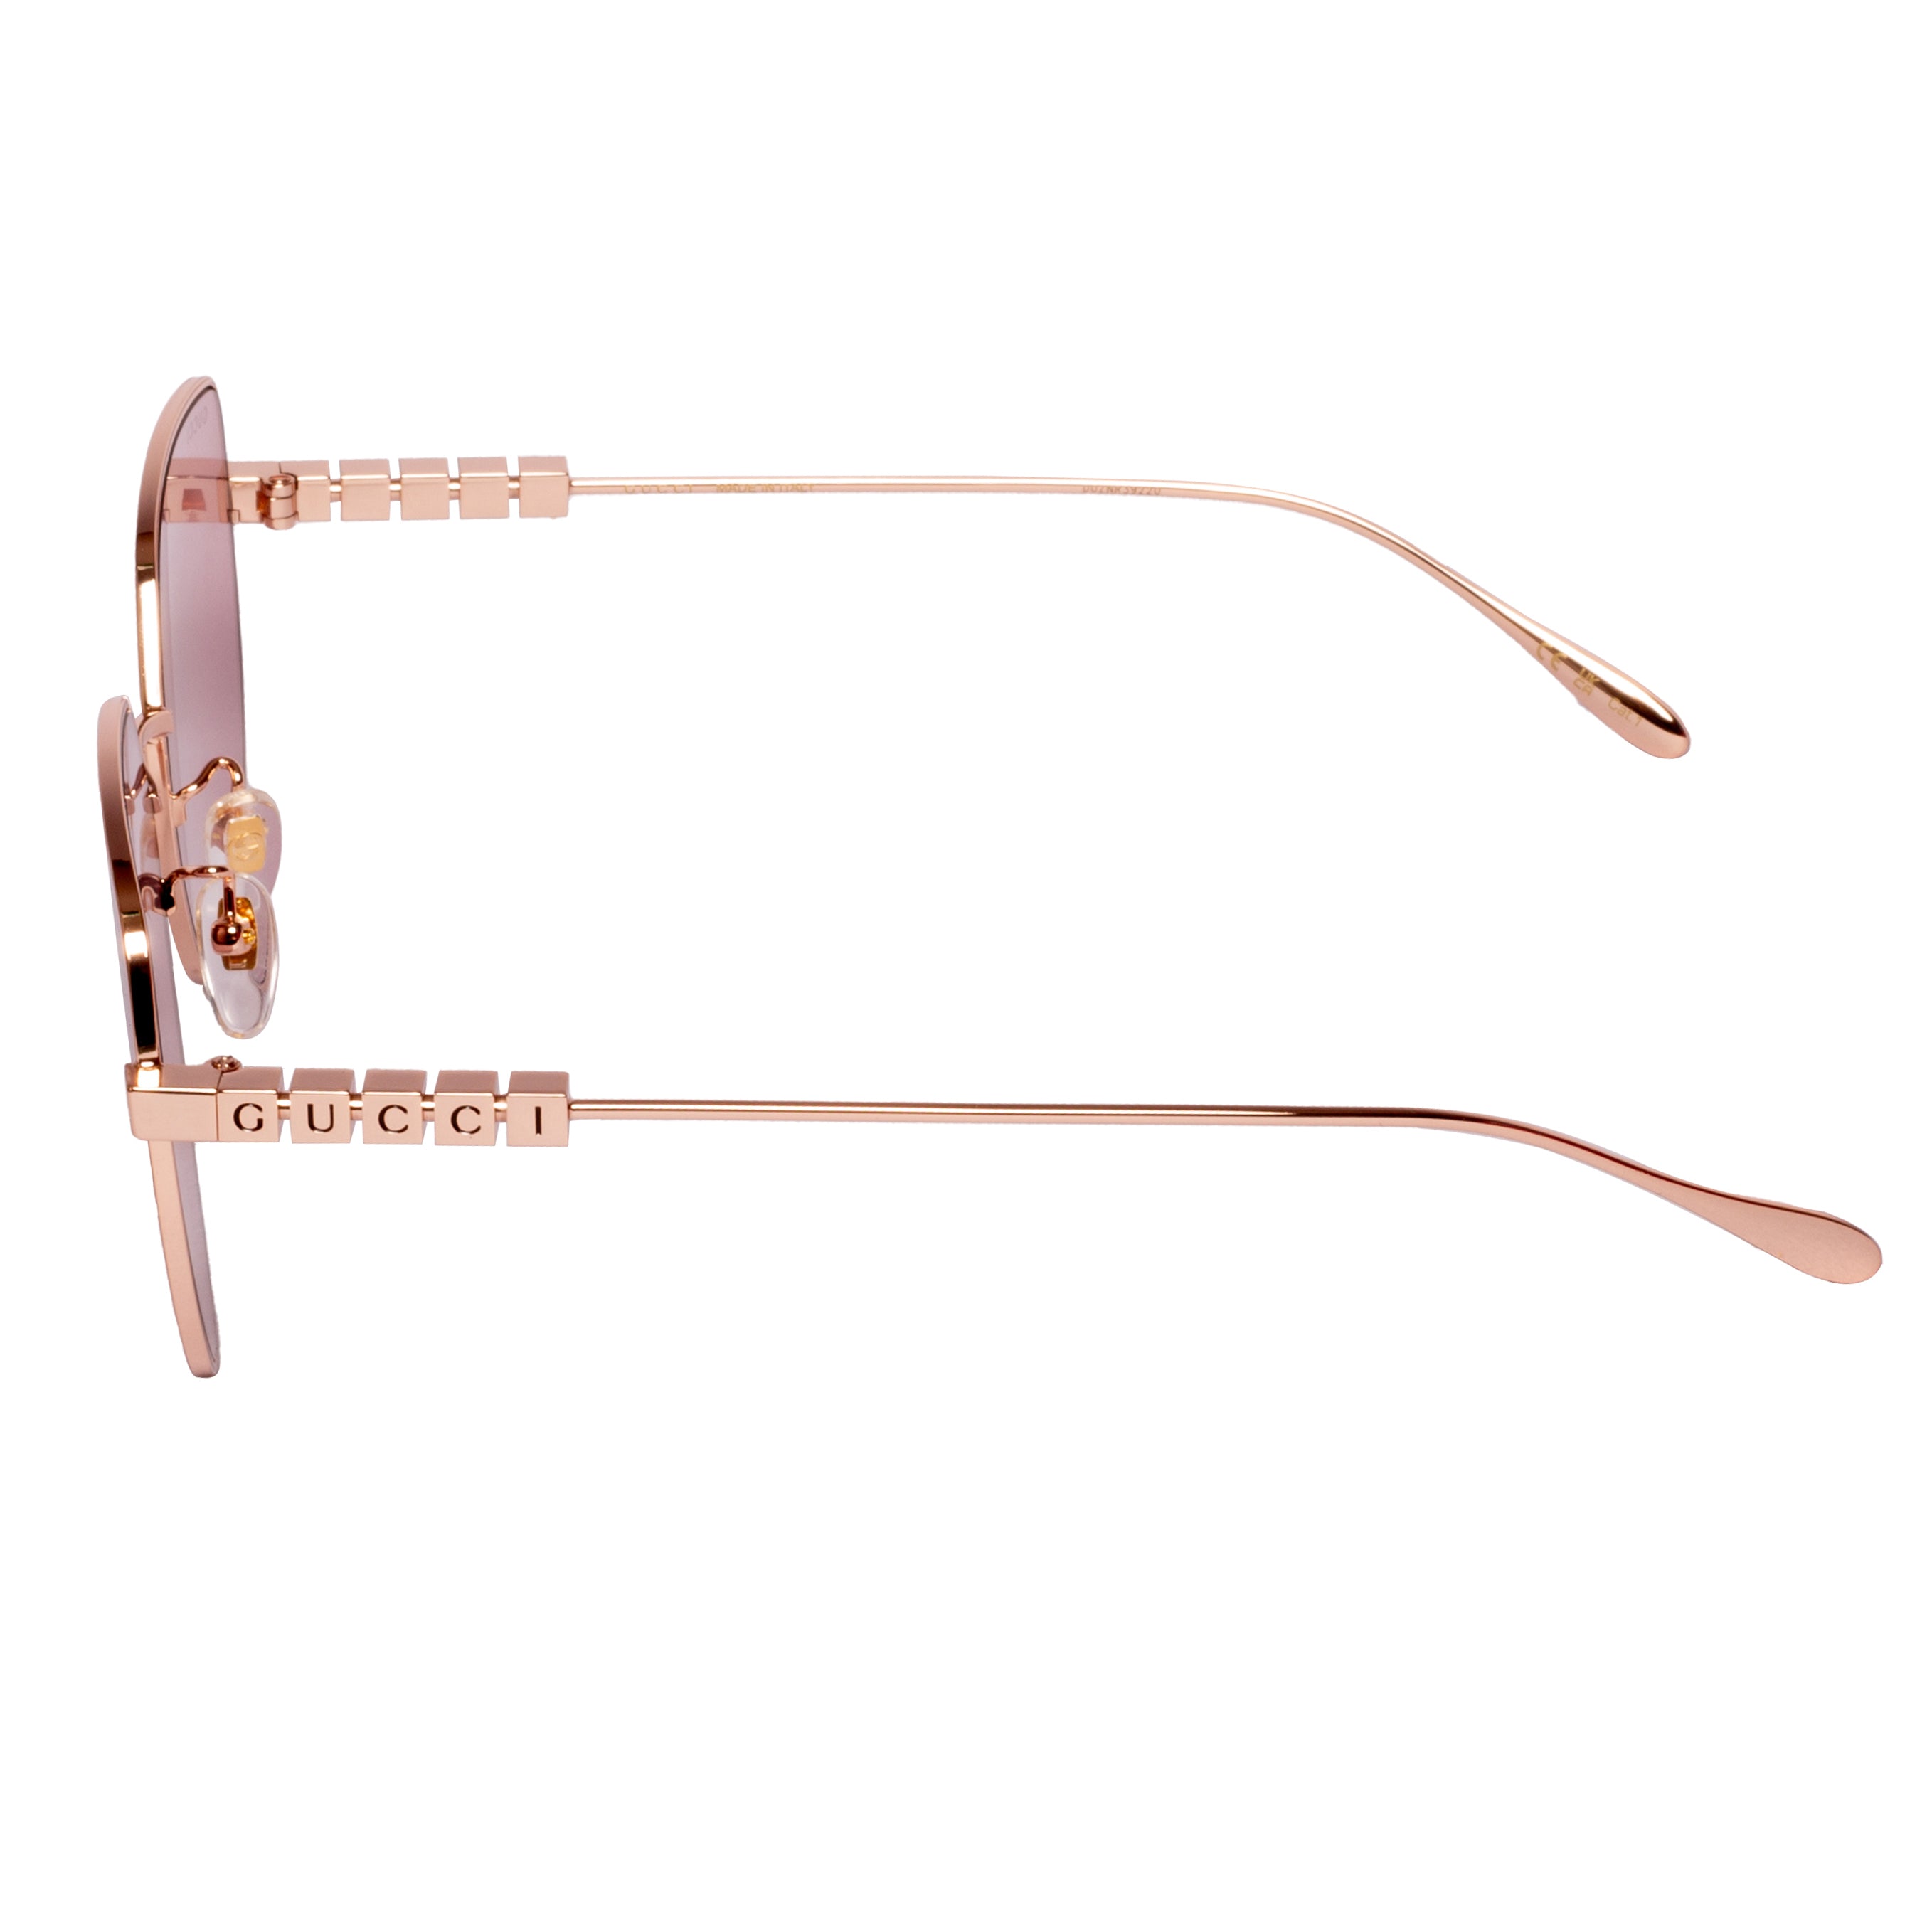 Gucci-GG 1435SA-58-003 Sunglasses - Premium Sunglasses from Gucci - Just Rs. 30600! Shop now at Laxmi Opticians